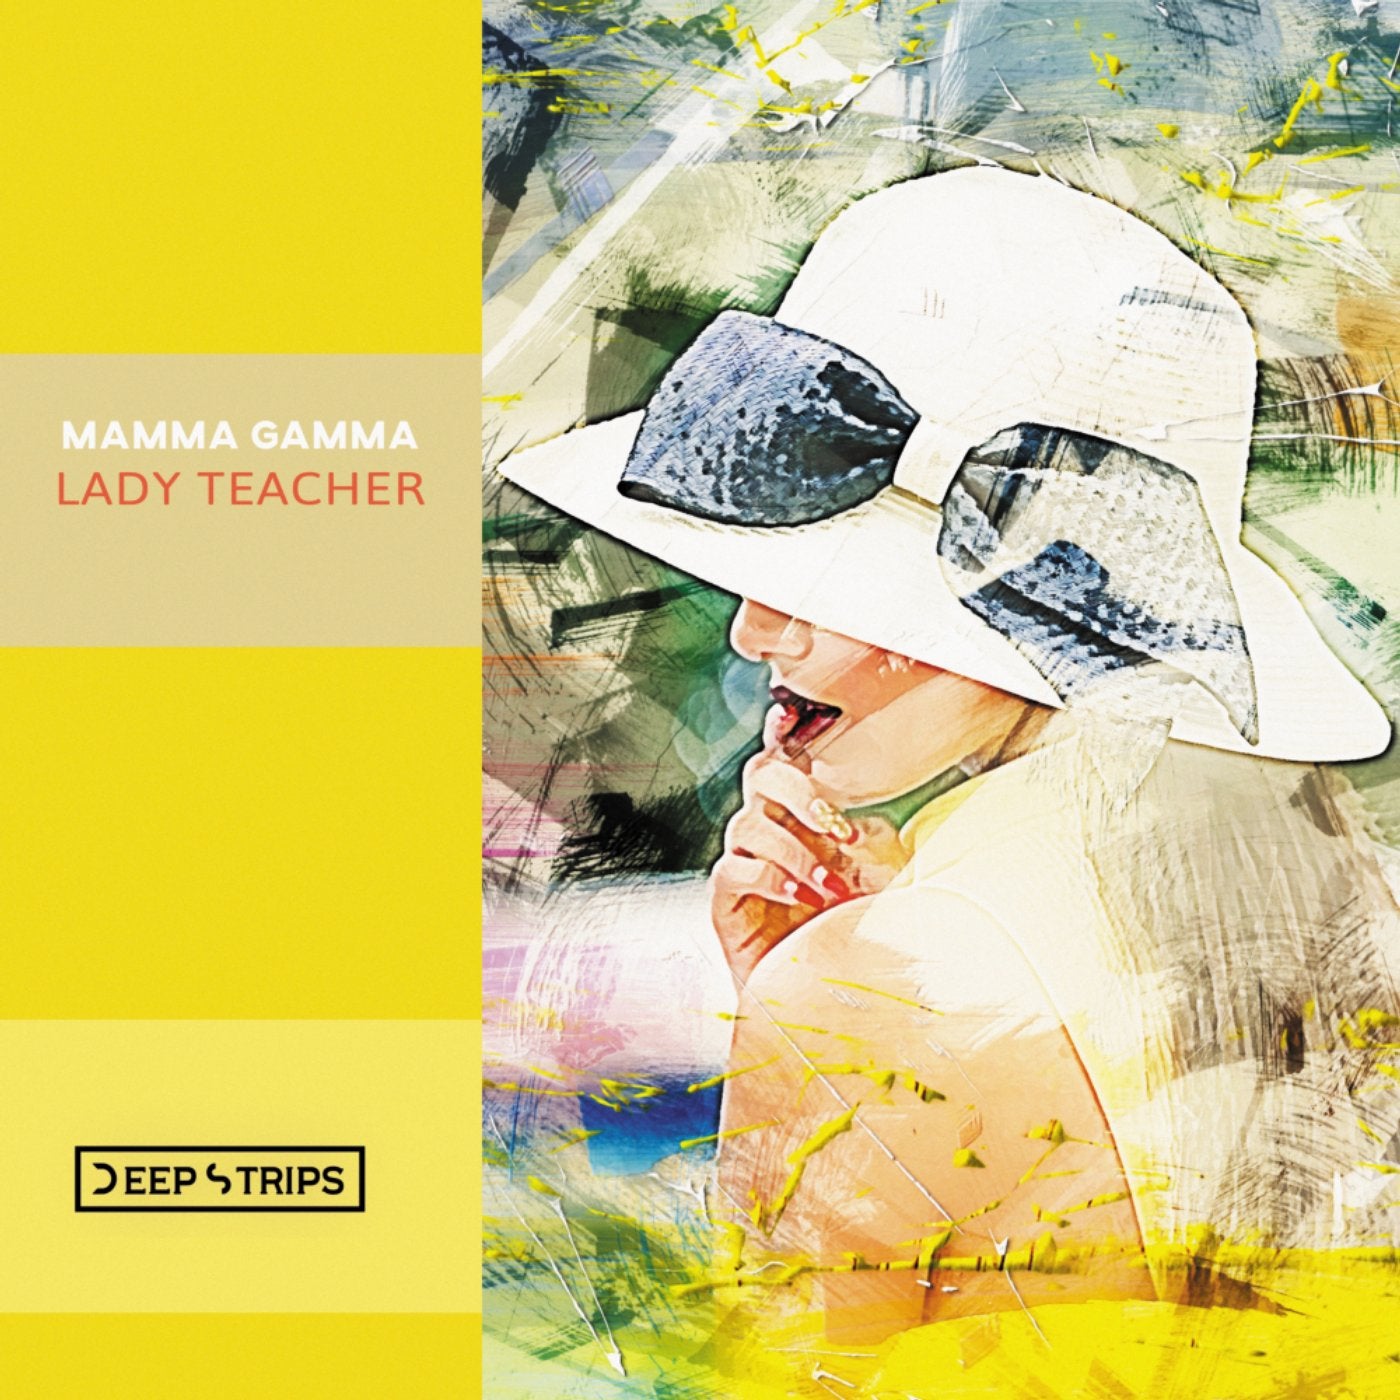 Lady Teacher